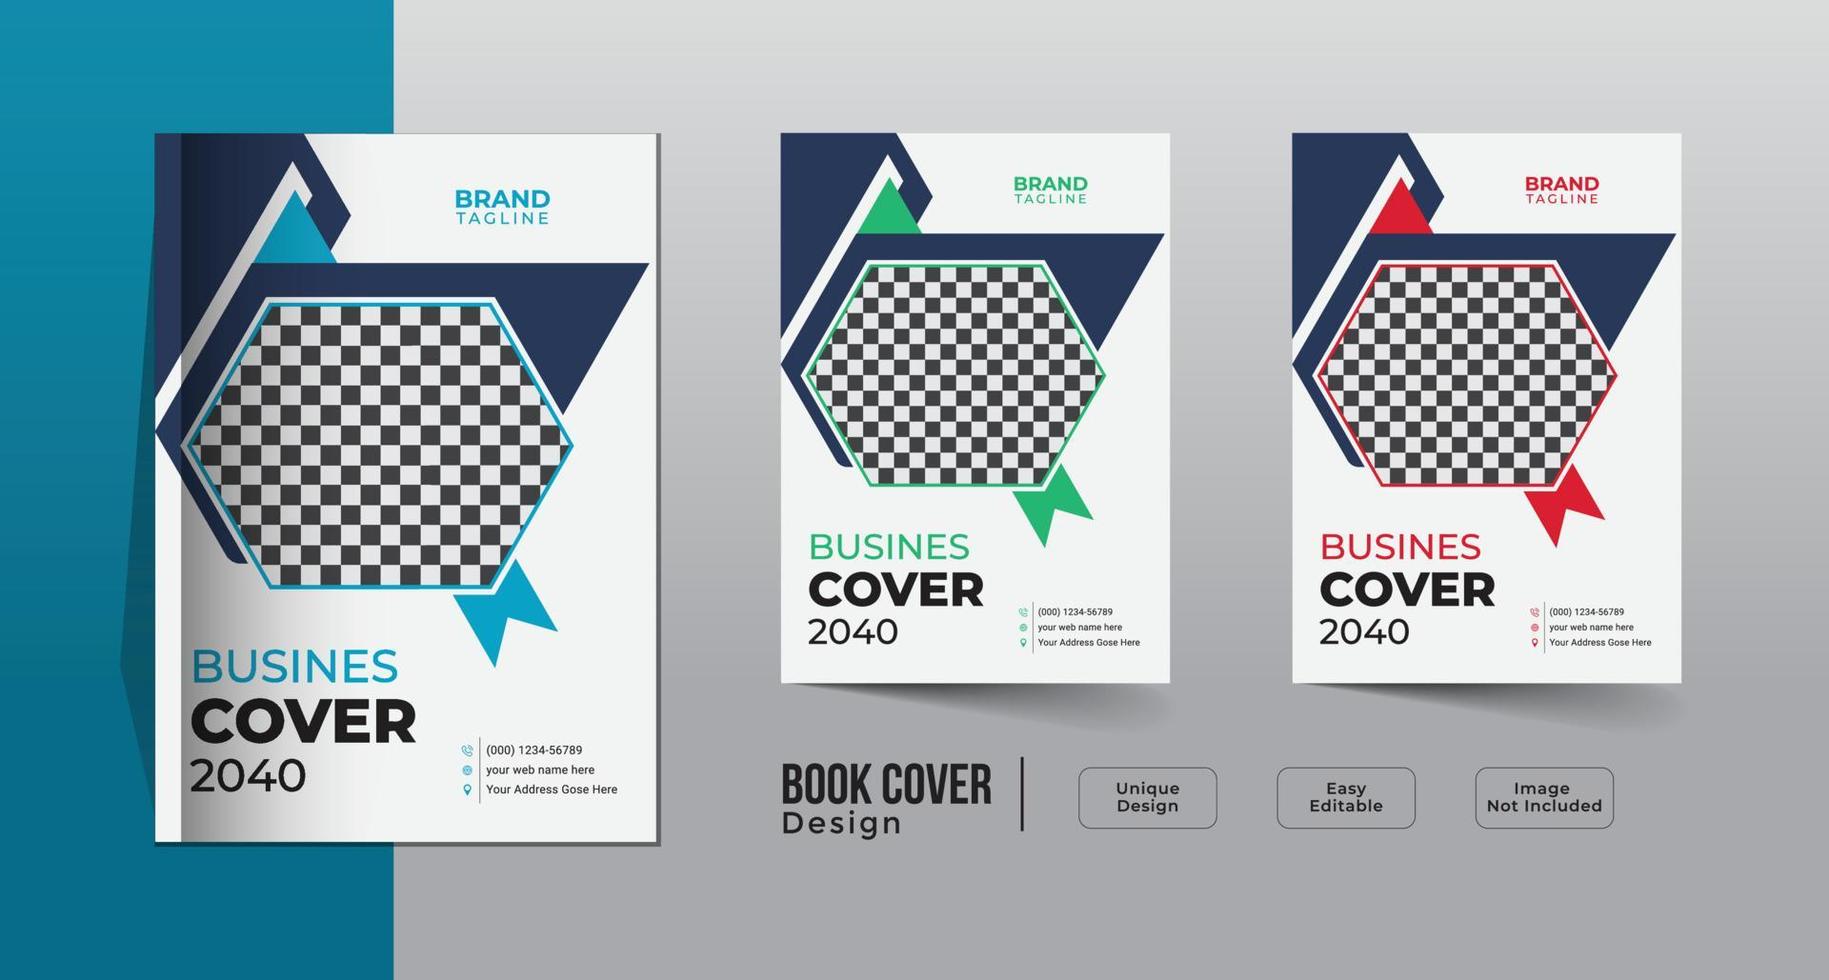 Corporate Business Book Cover Template-Design vektor